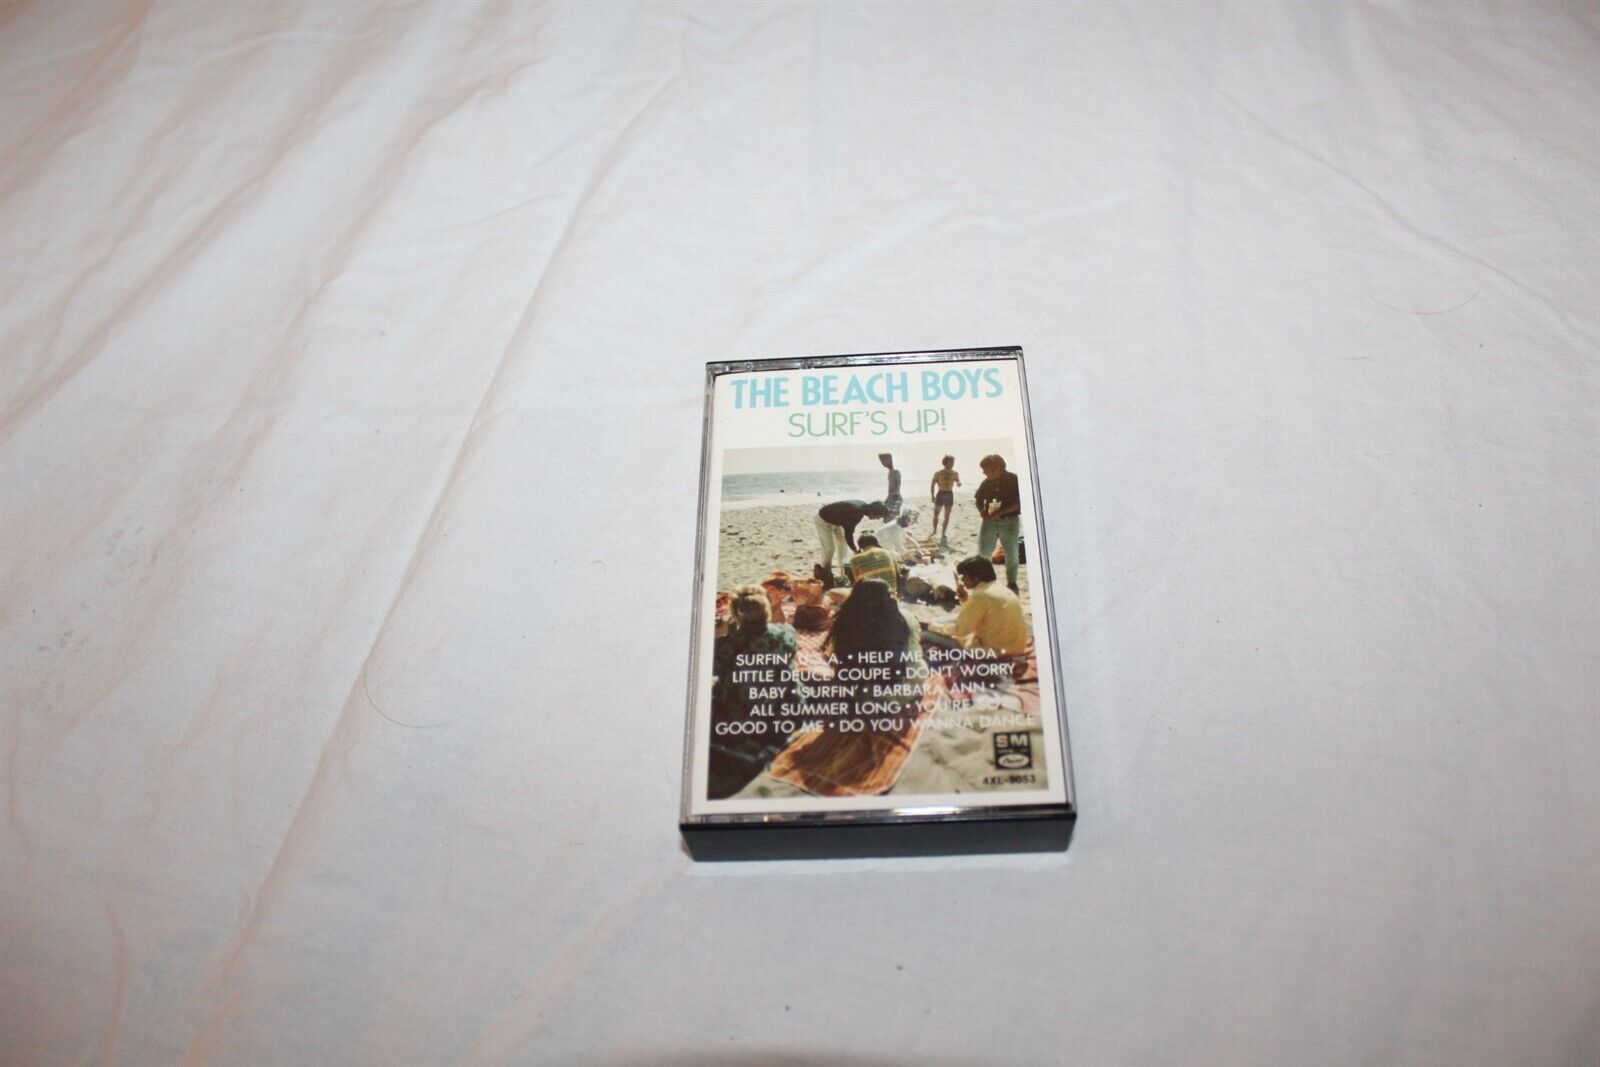 Vintage Music Cassette Tape The Beach Boys Surfs Up